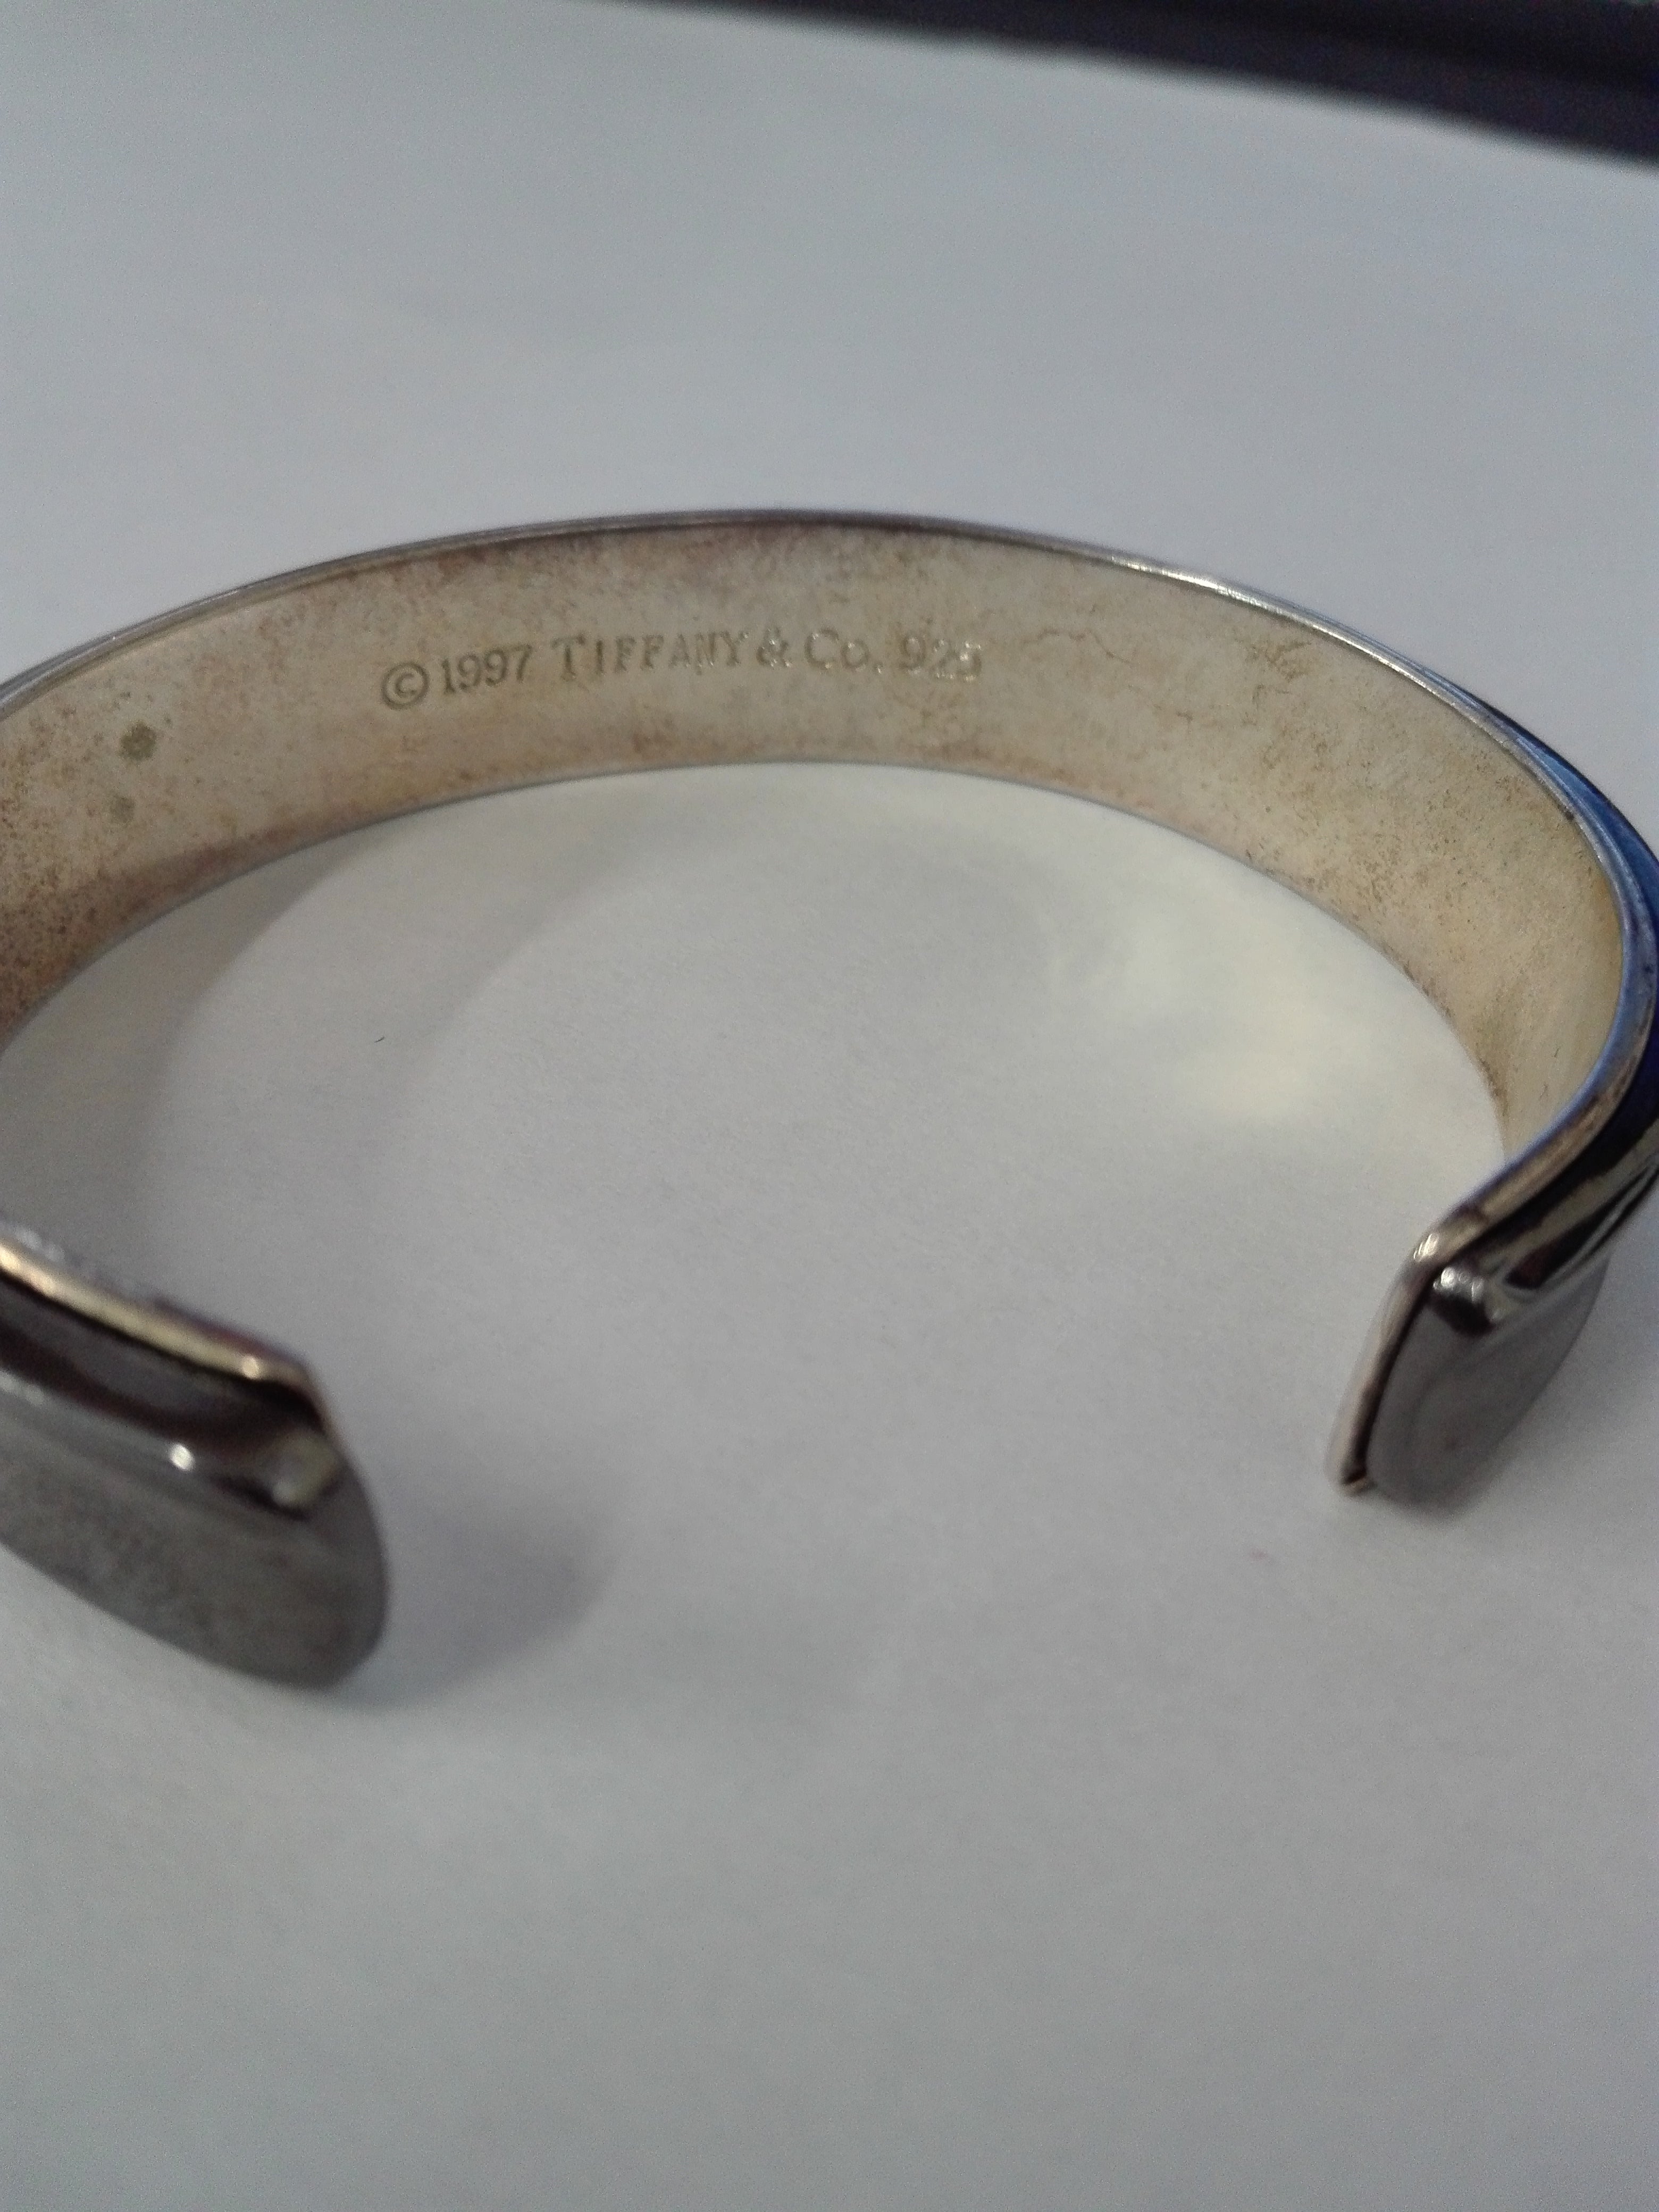 TIFFANY & CO. Midnight Titanium & Sterling Silver NY 1837 Cuff Bracelet